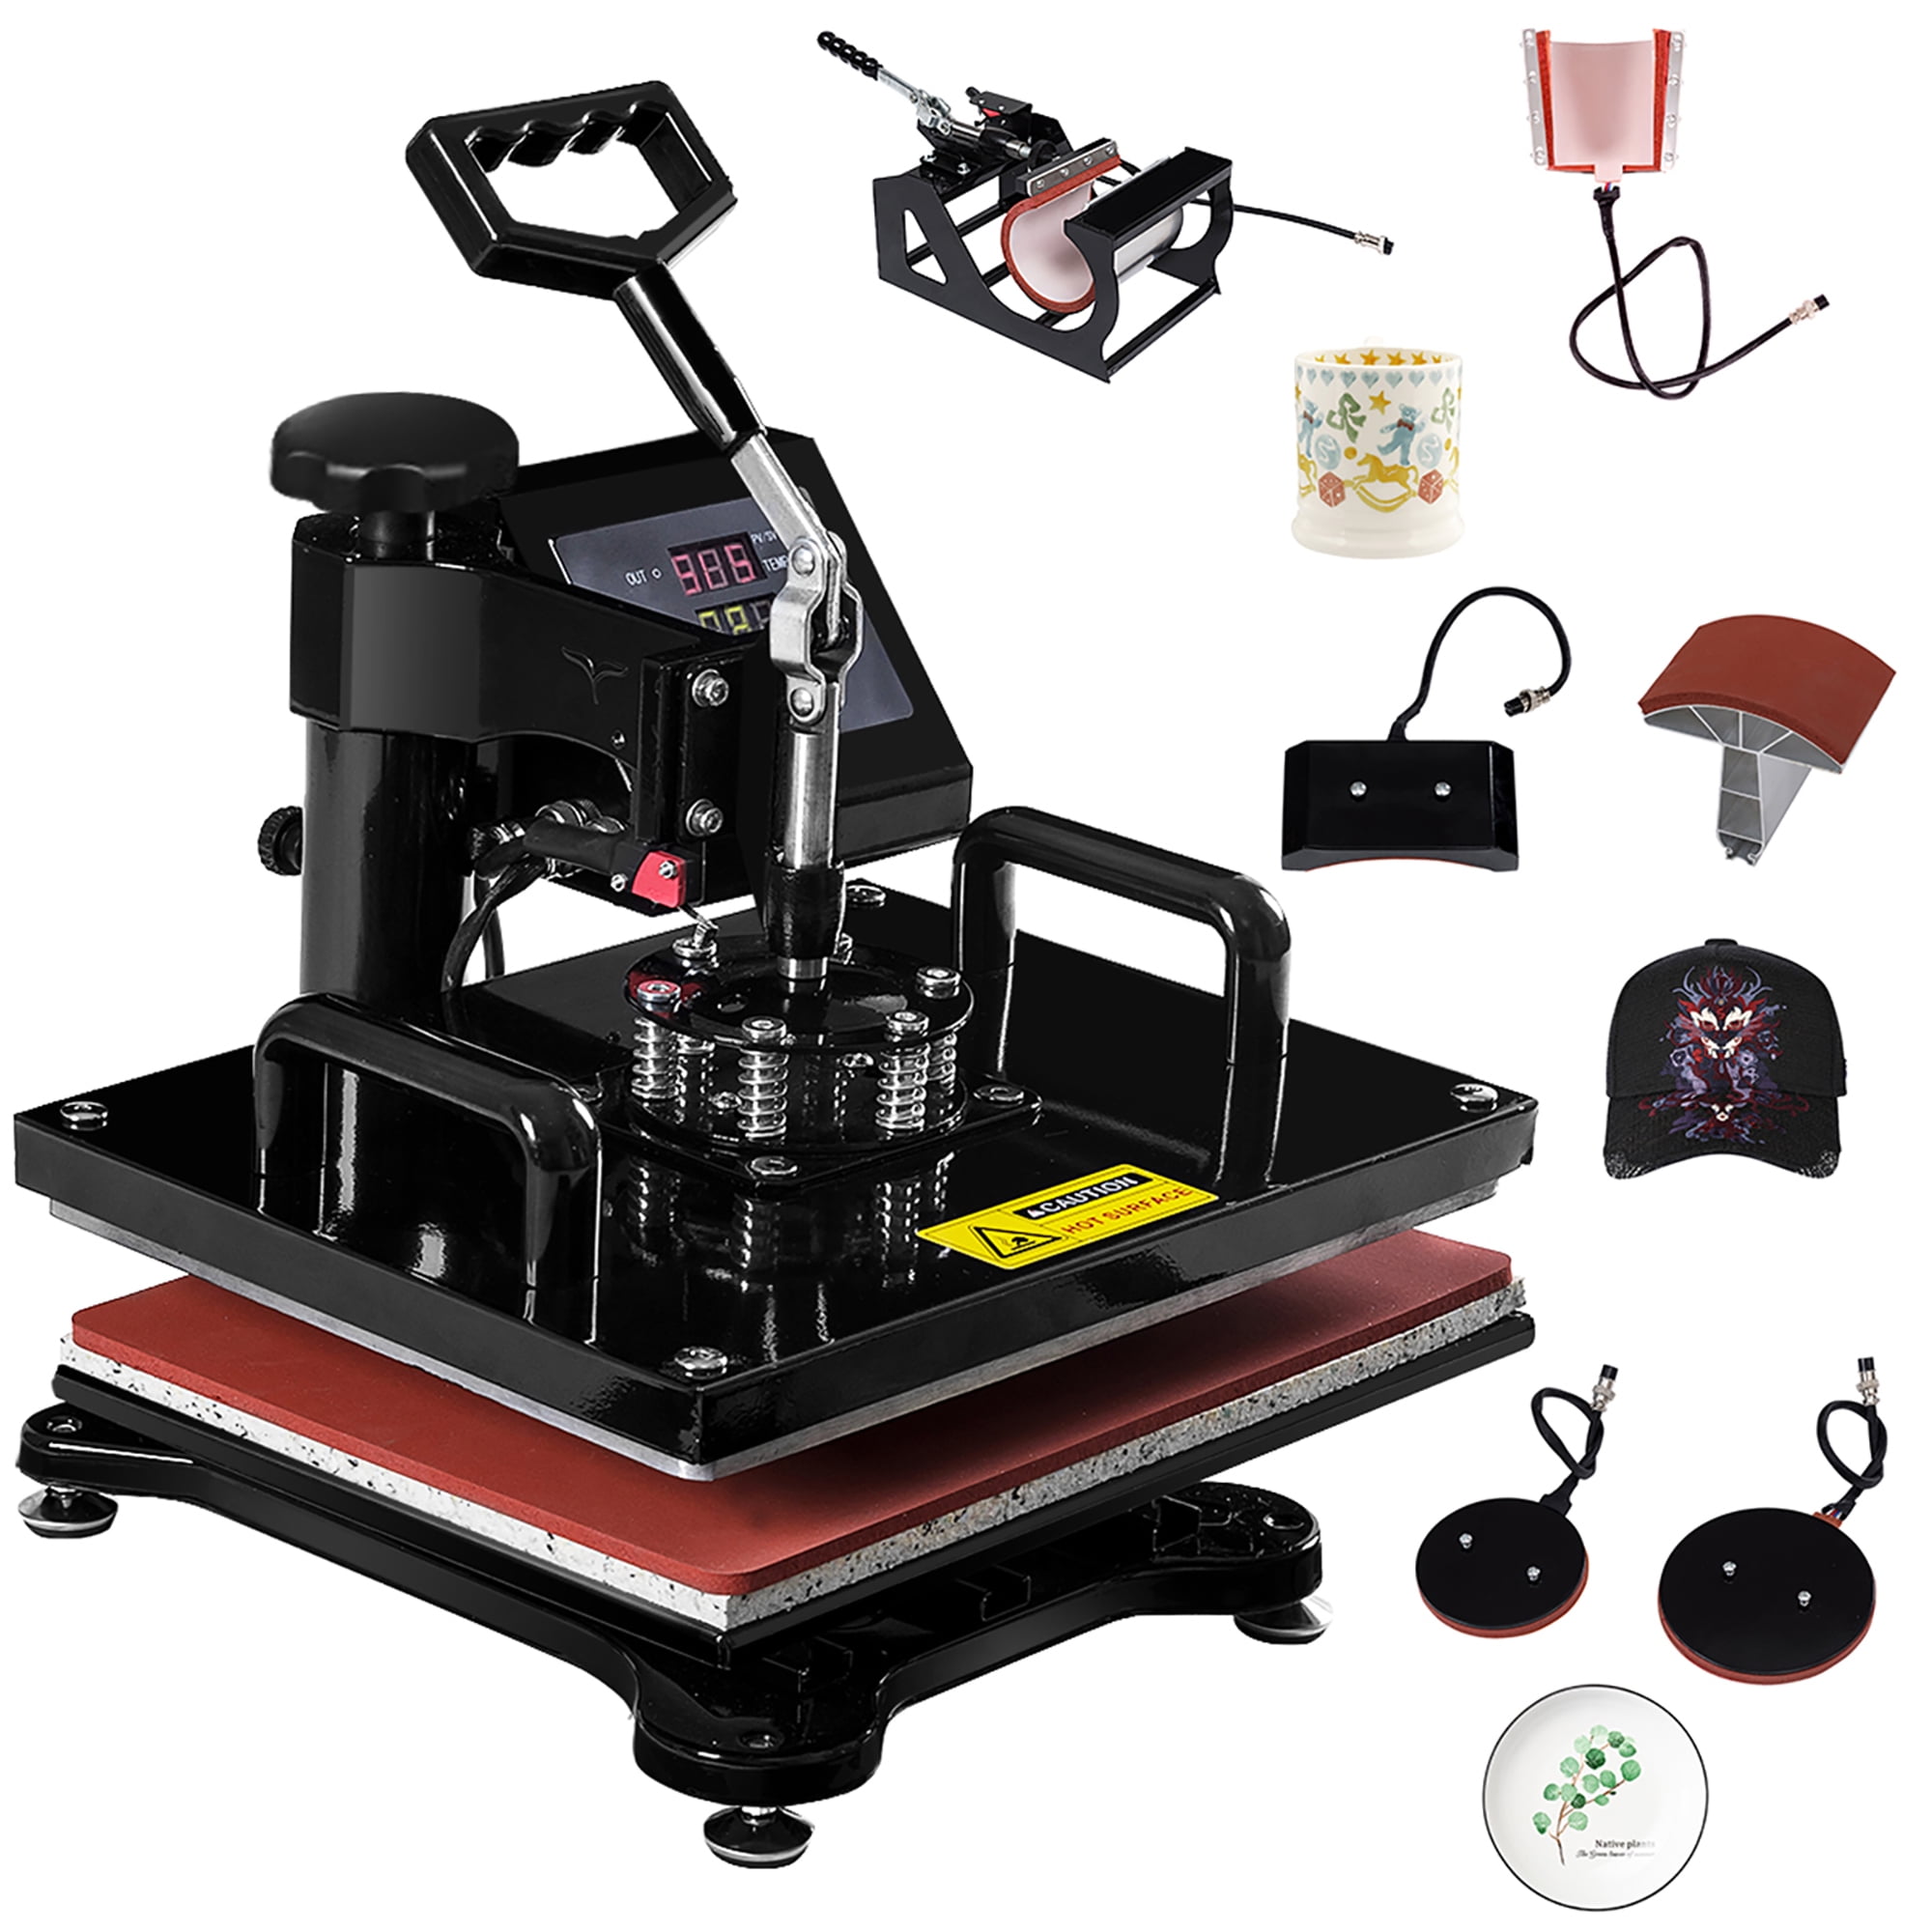 PerfecPress Hat/Cap Heat Press, Printing Equipment